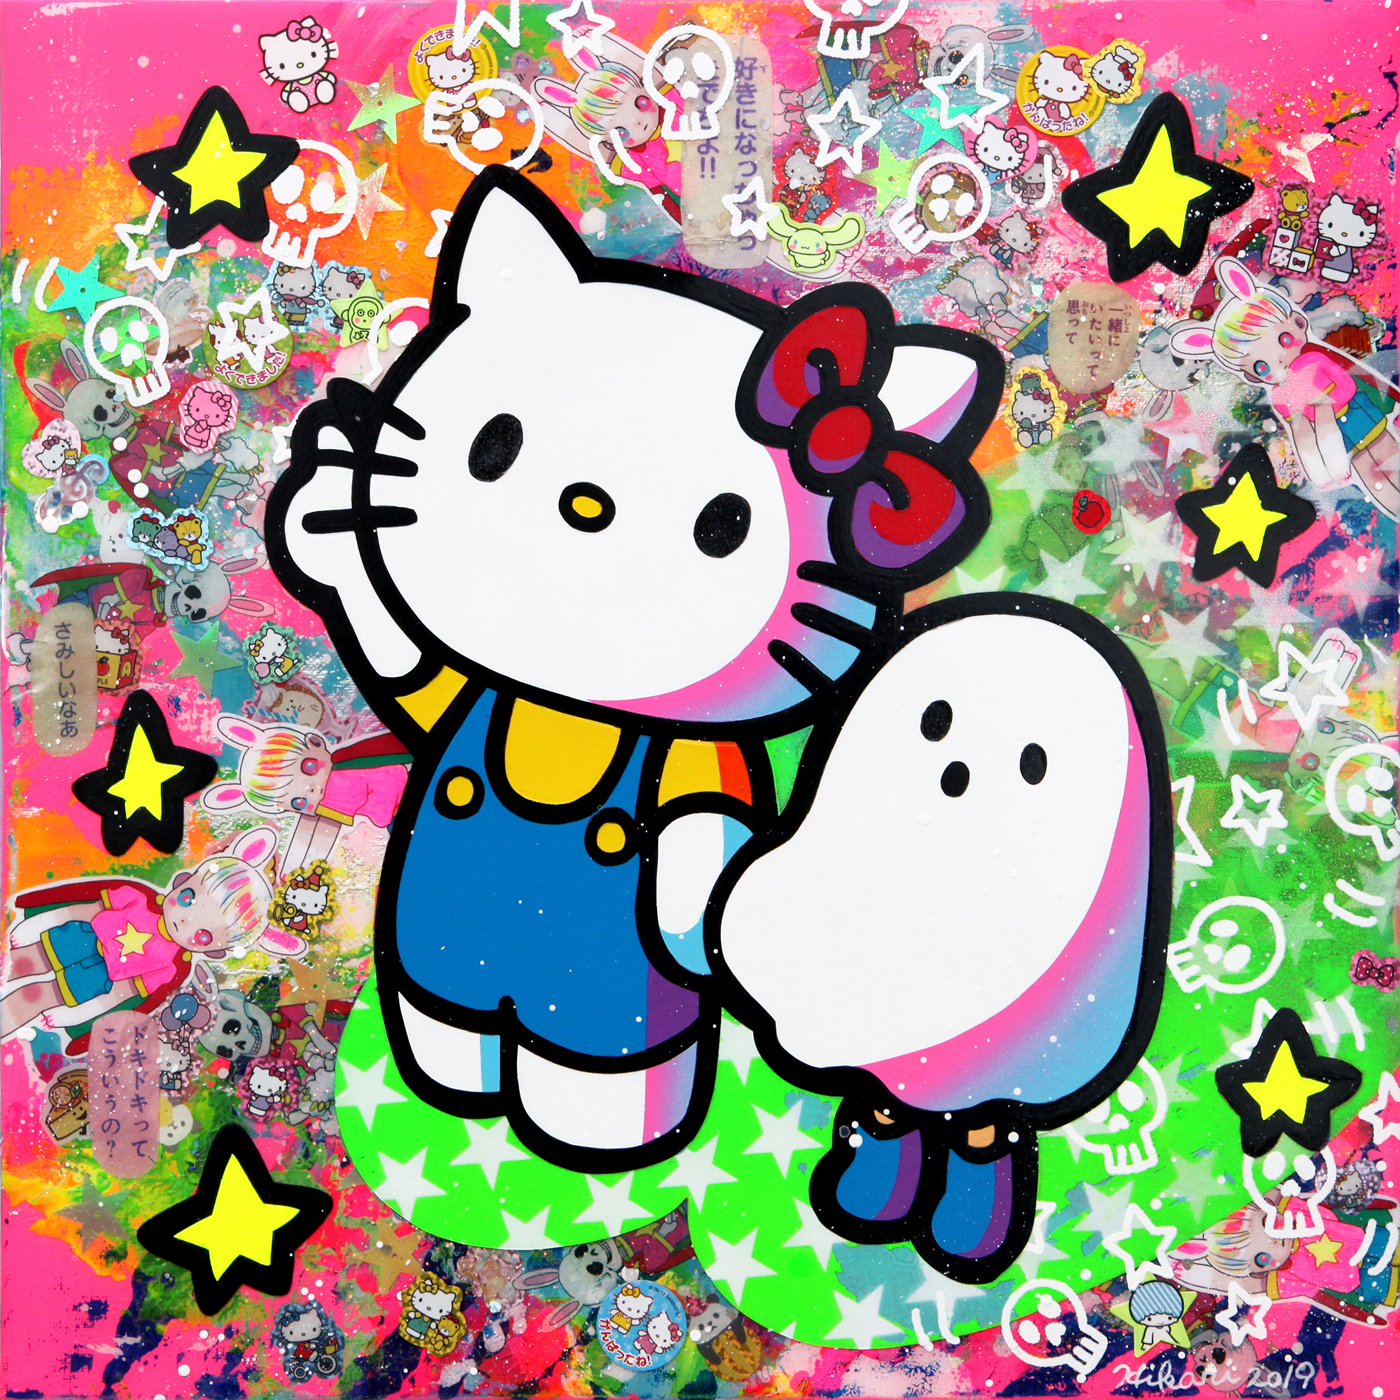  Hello  Kitty  s 45th Anniversary Group Show  Hikari Shimoda